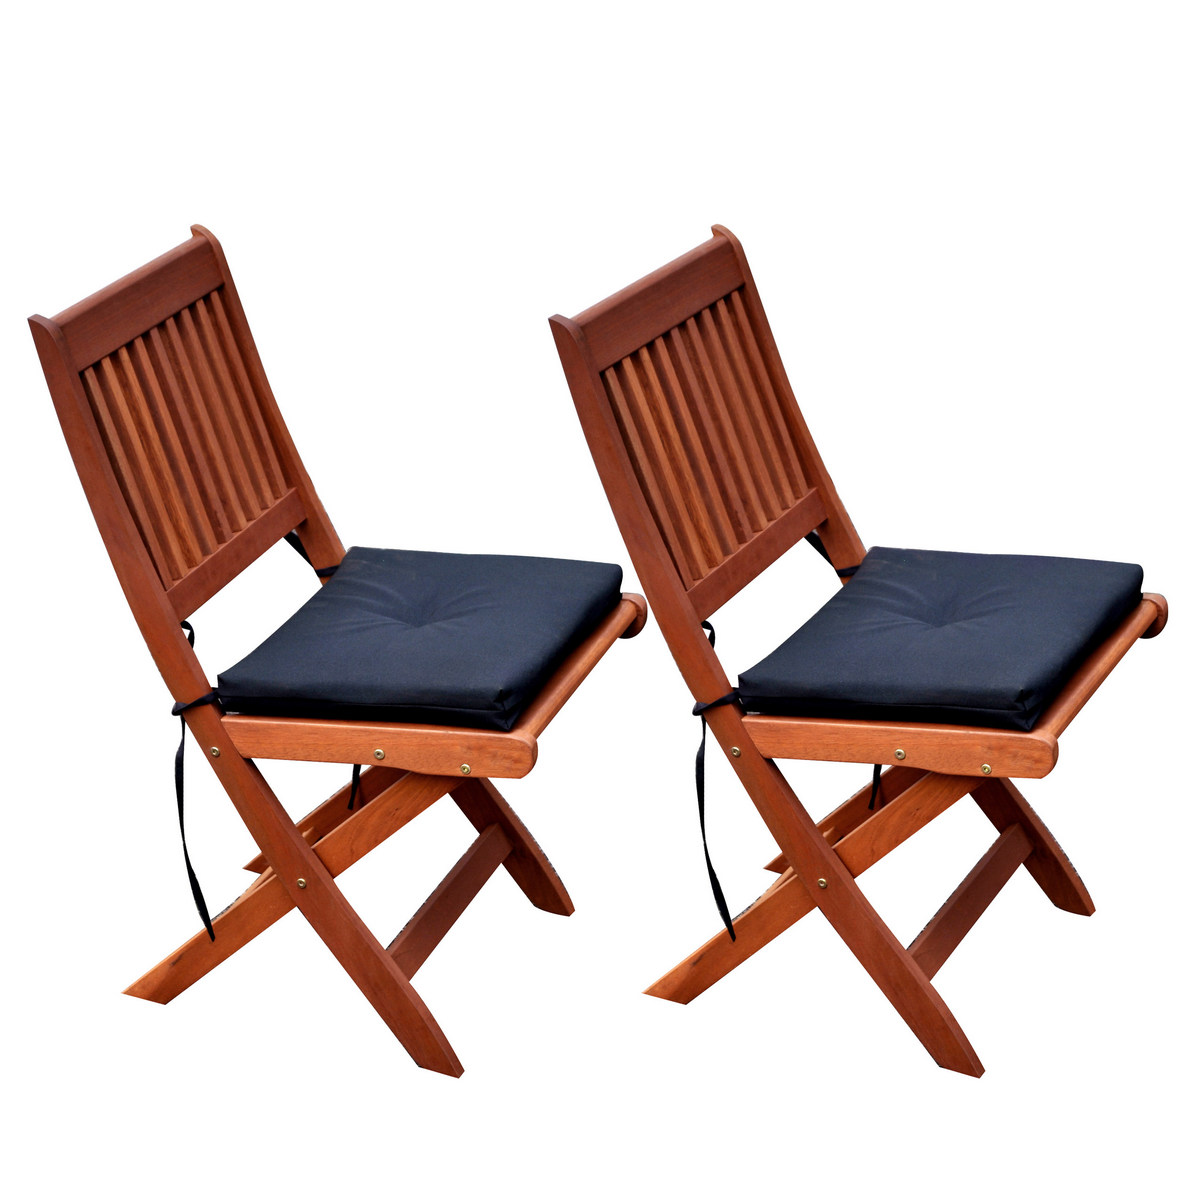 CorLiving PEX-369-C Miramar Cinnamon Brown Hardwood Outdoor Folding Chairs, Set of 2